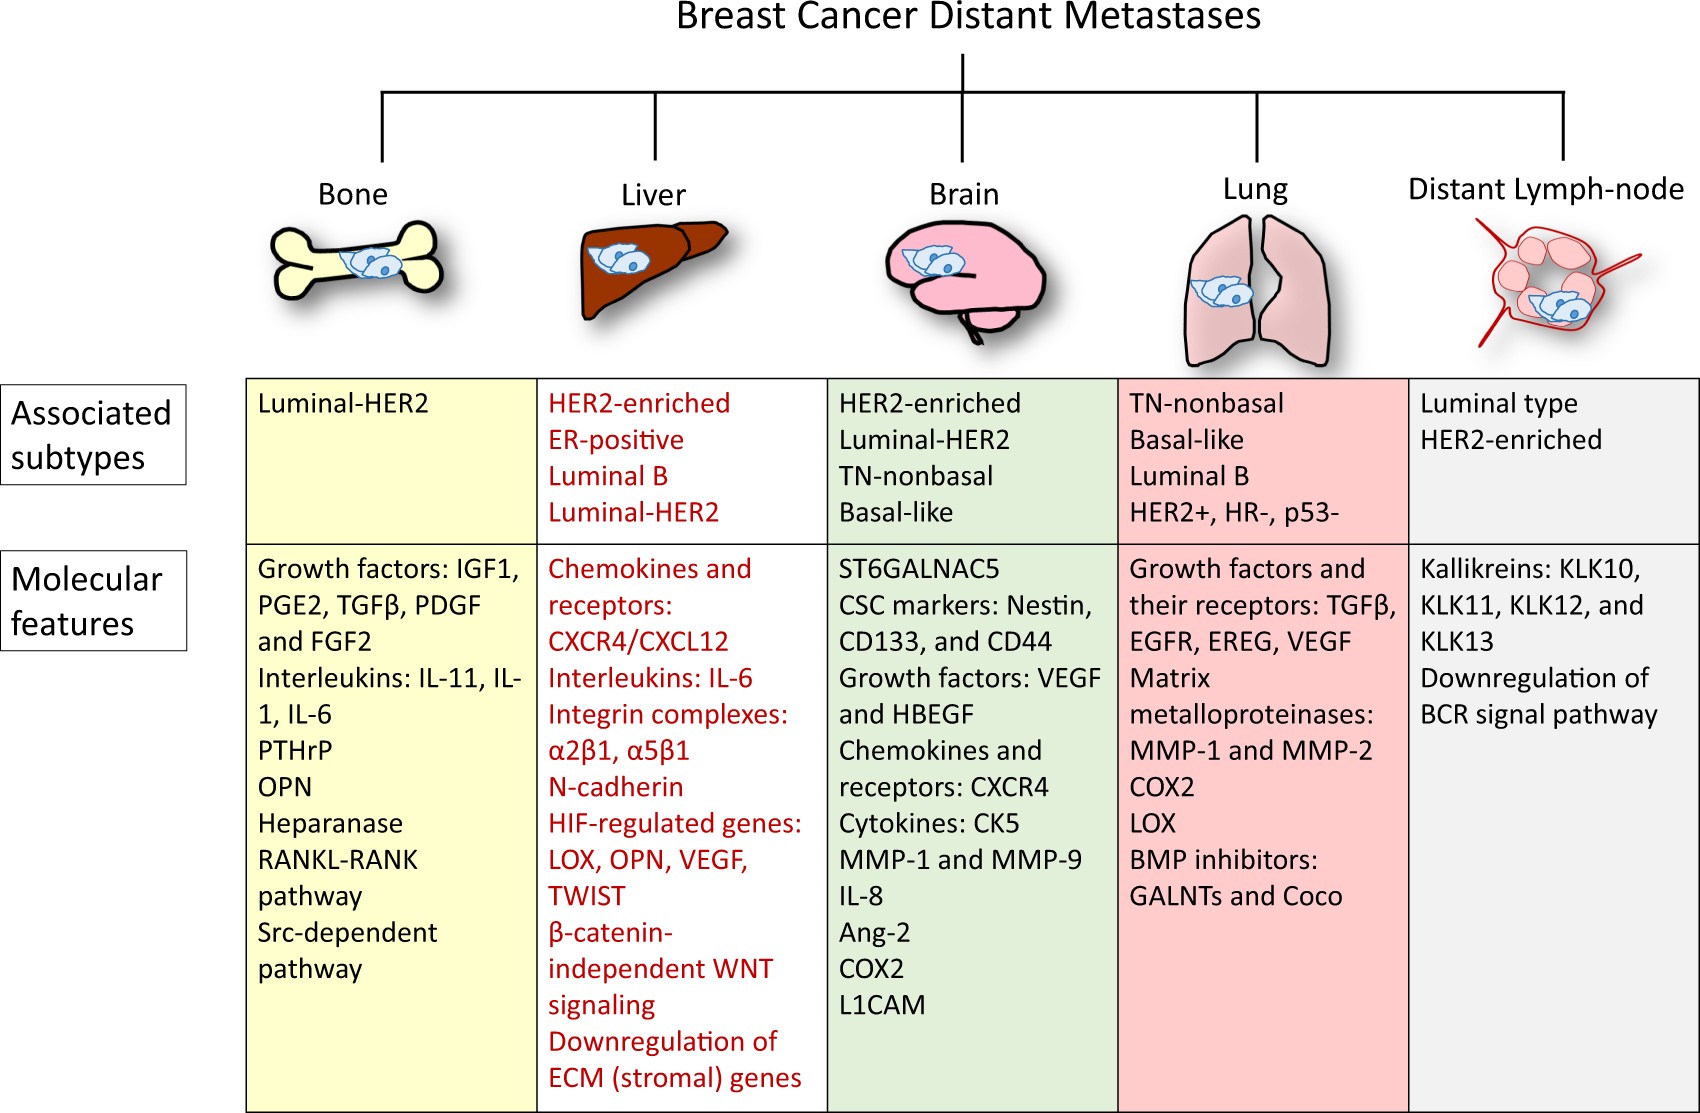 organotropism: new insights into molecular mechanisms of breast